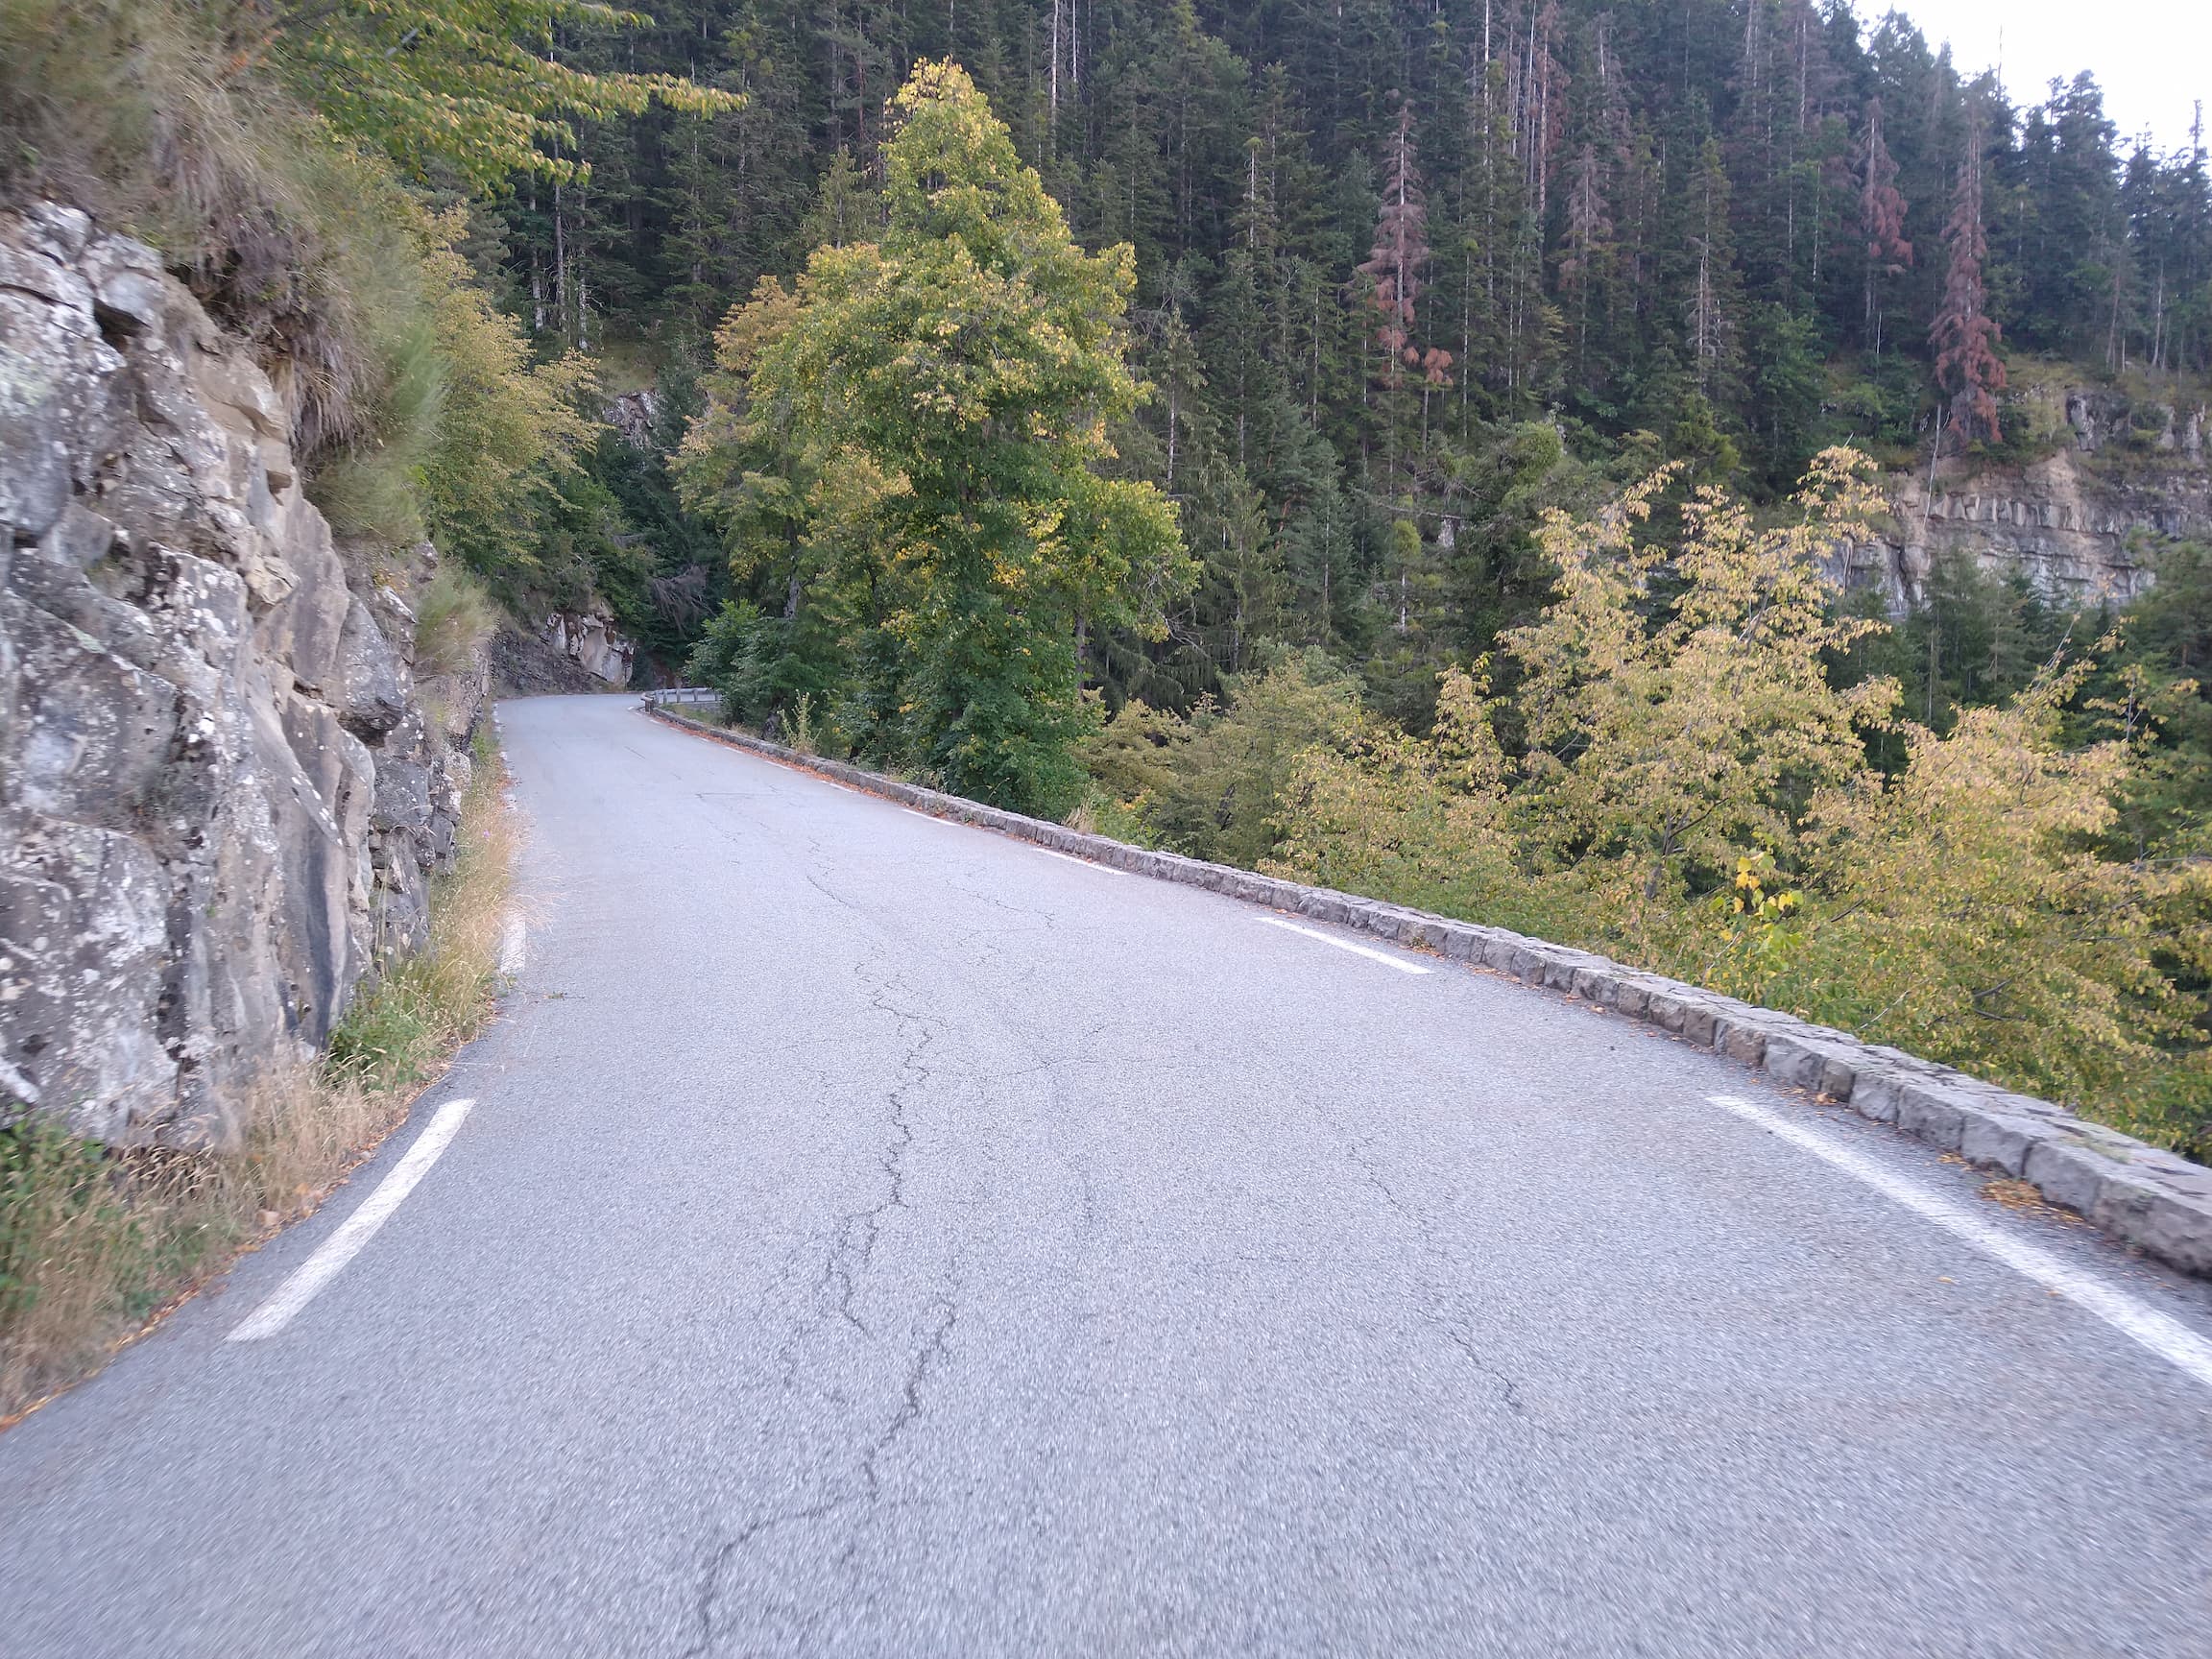 Quiet road on the way to Col de Turini